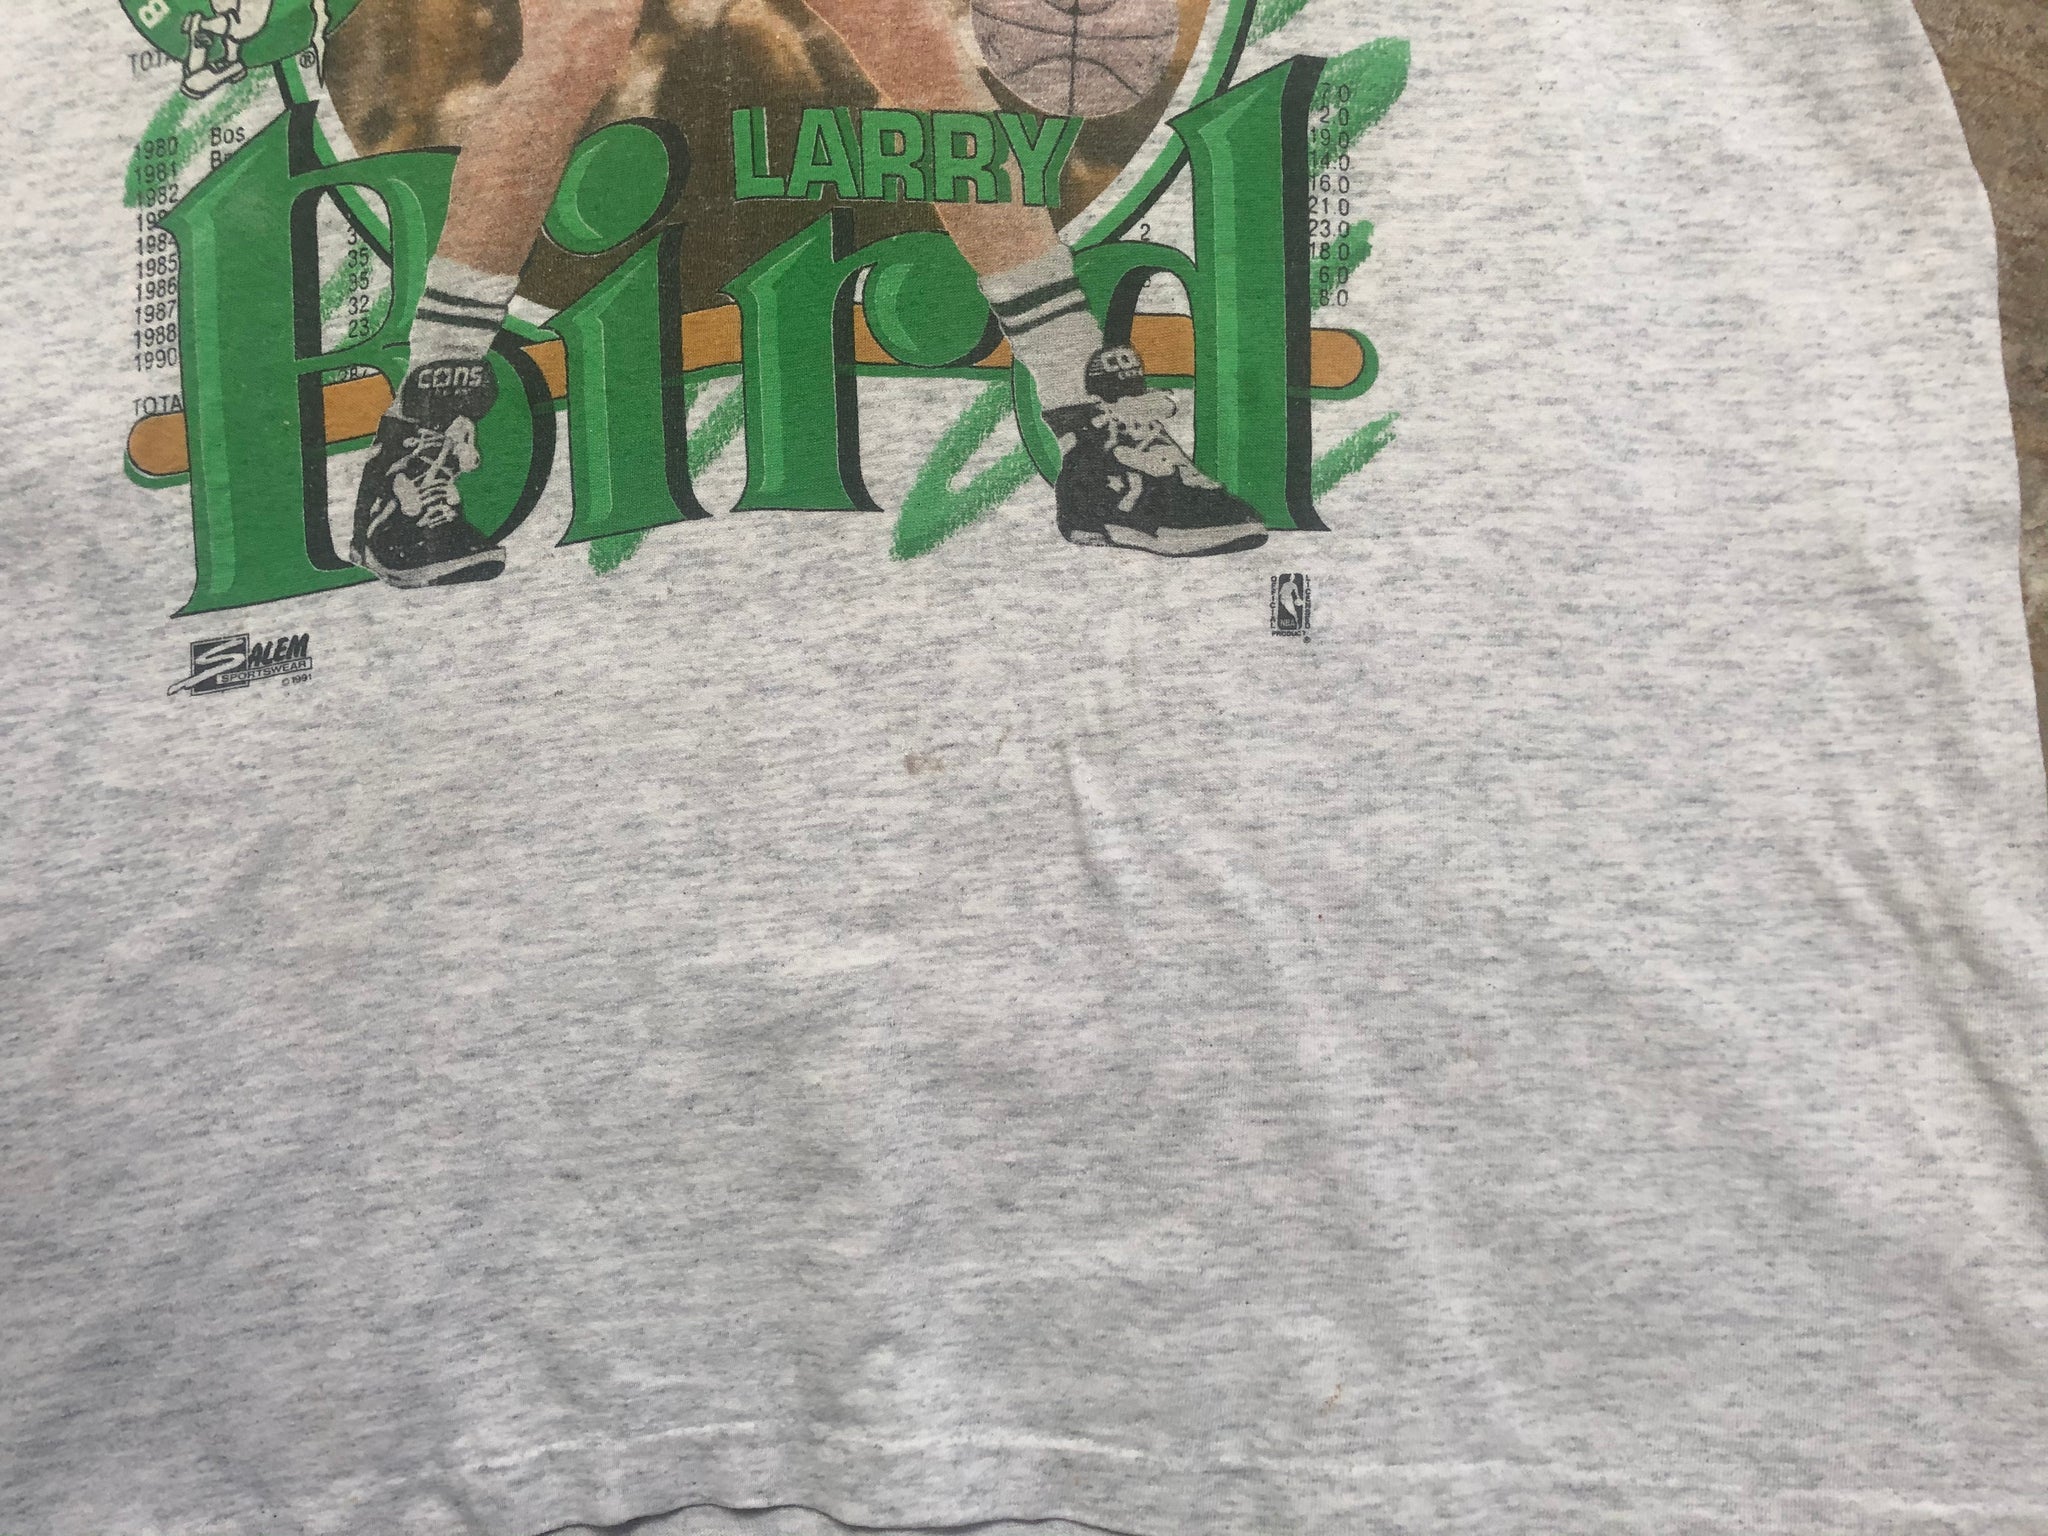 Vintage 1990 Larry Bird Boston Celtics T-shirt by Salem